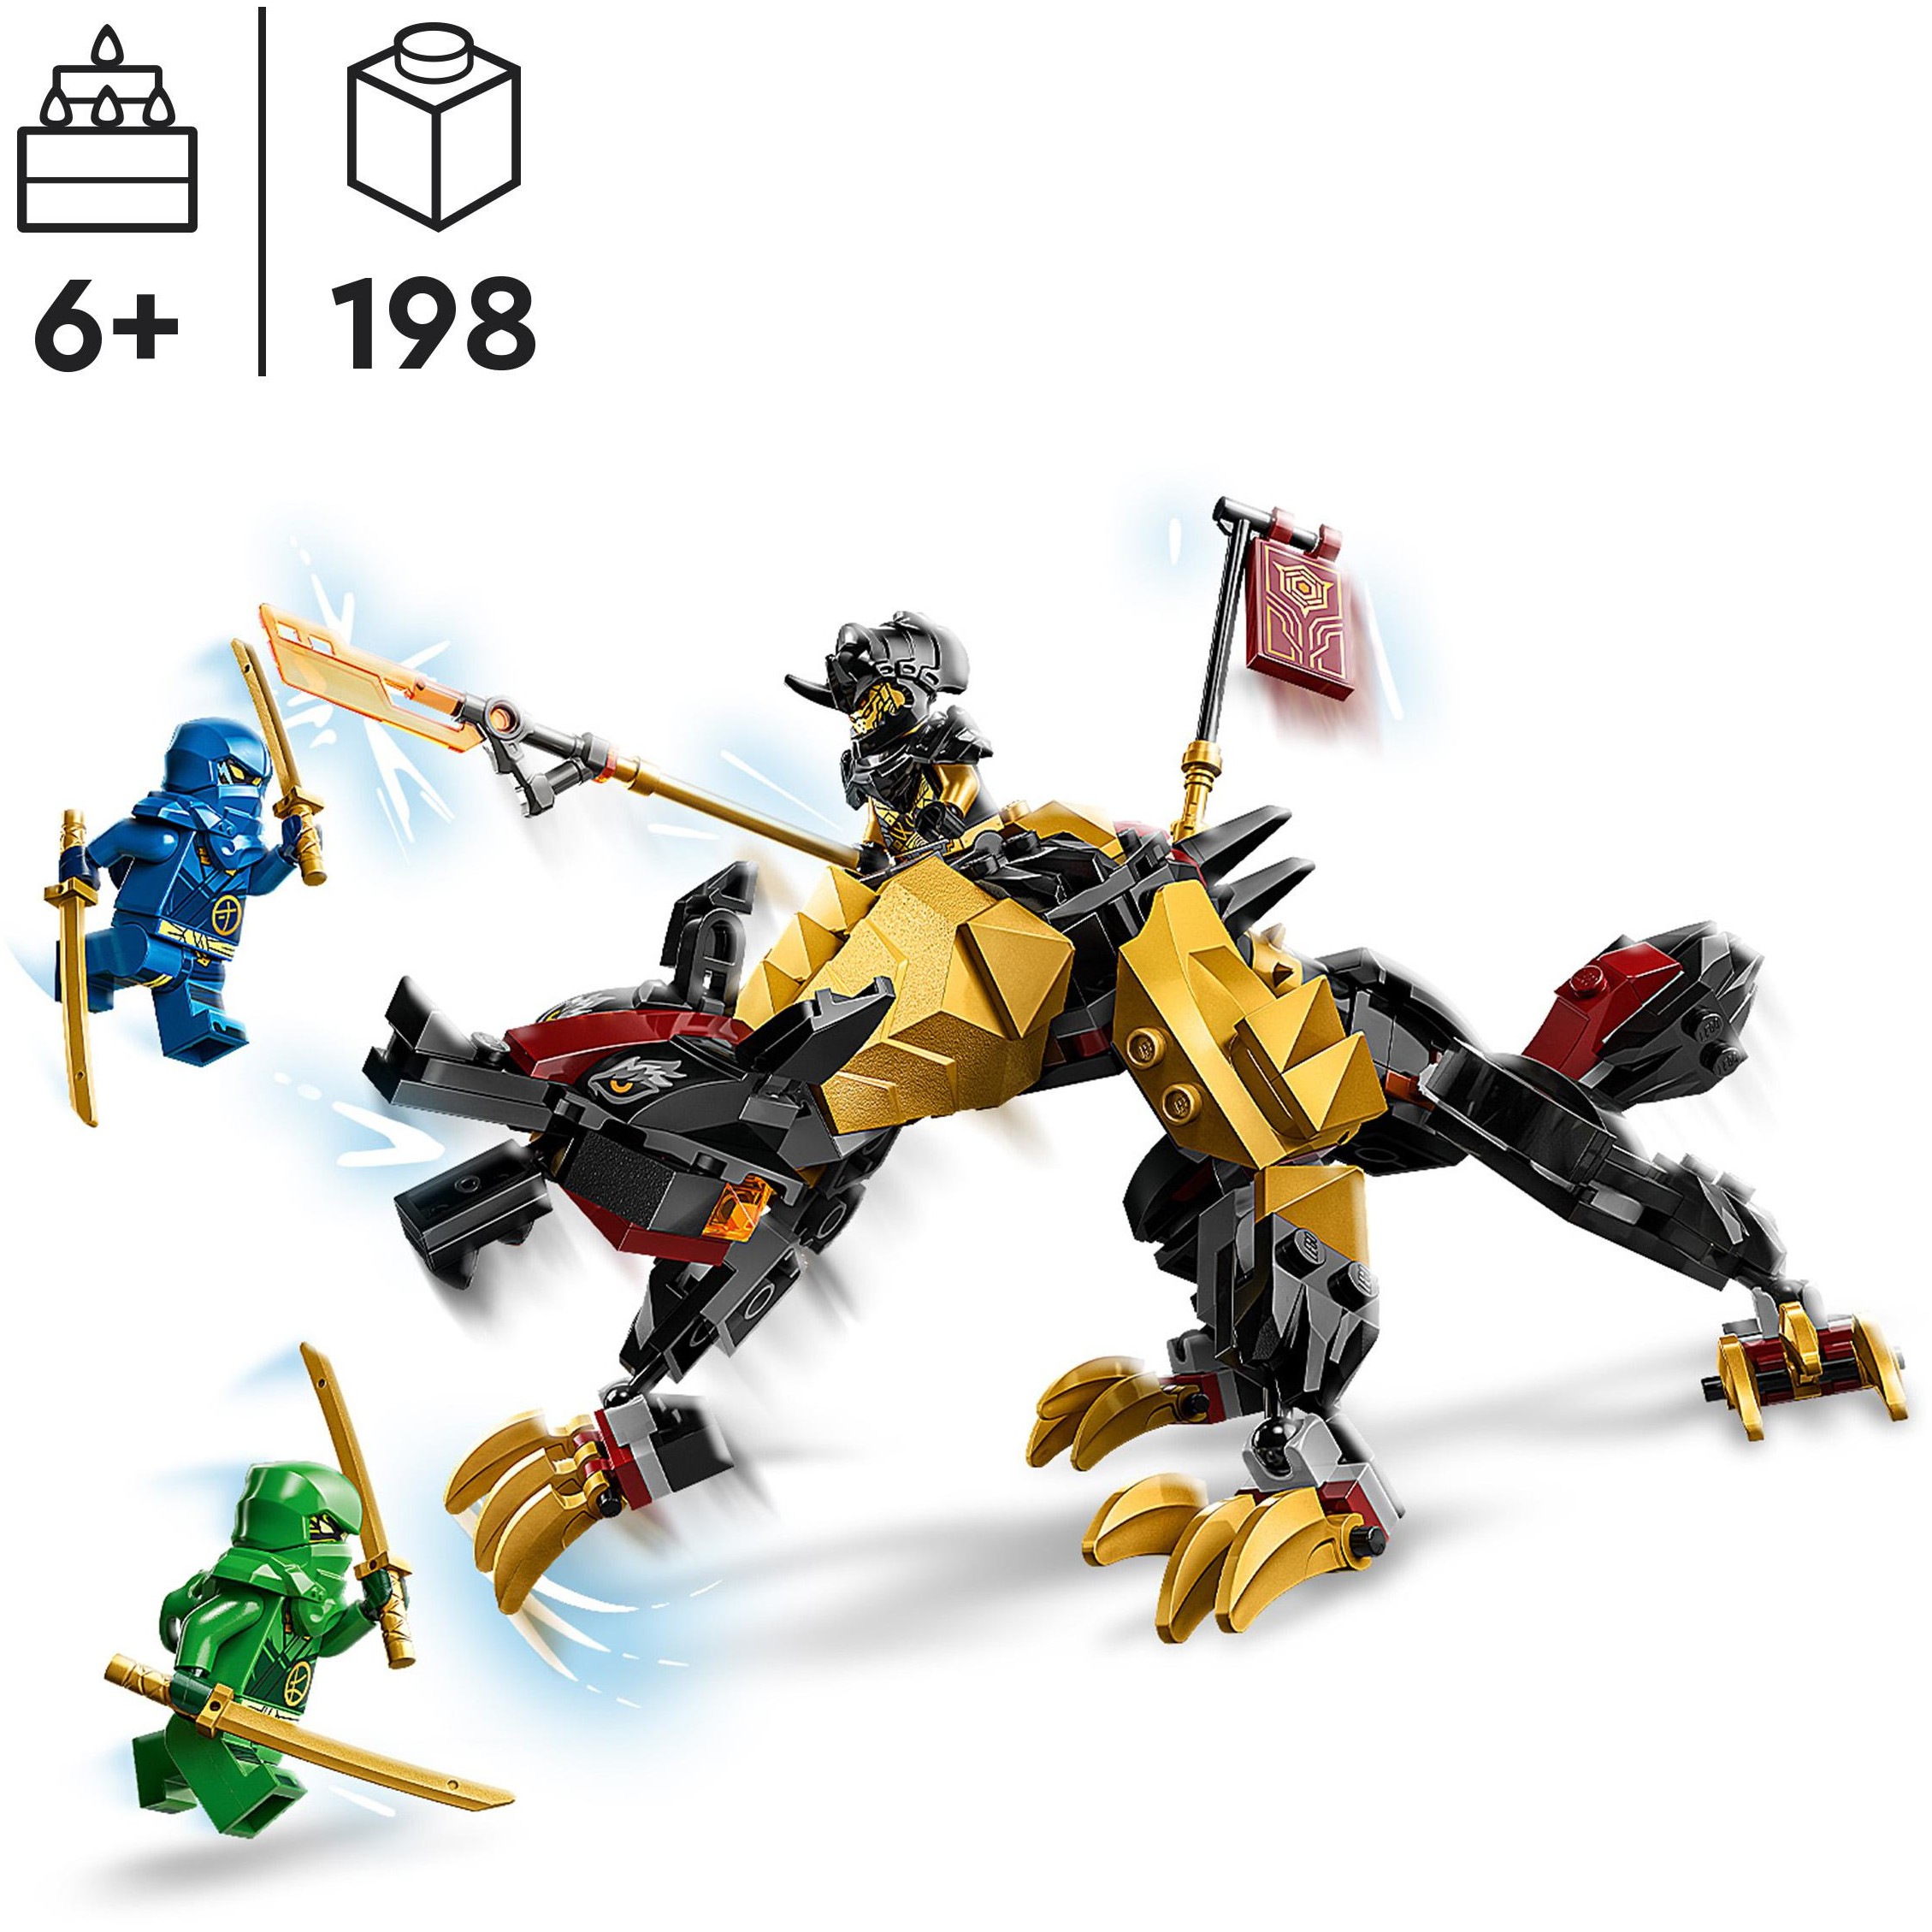 LEGO NINJAGO Jagdhund des kaiserl. Drachenjägers 71790